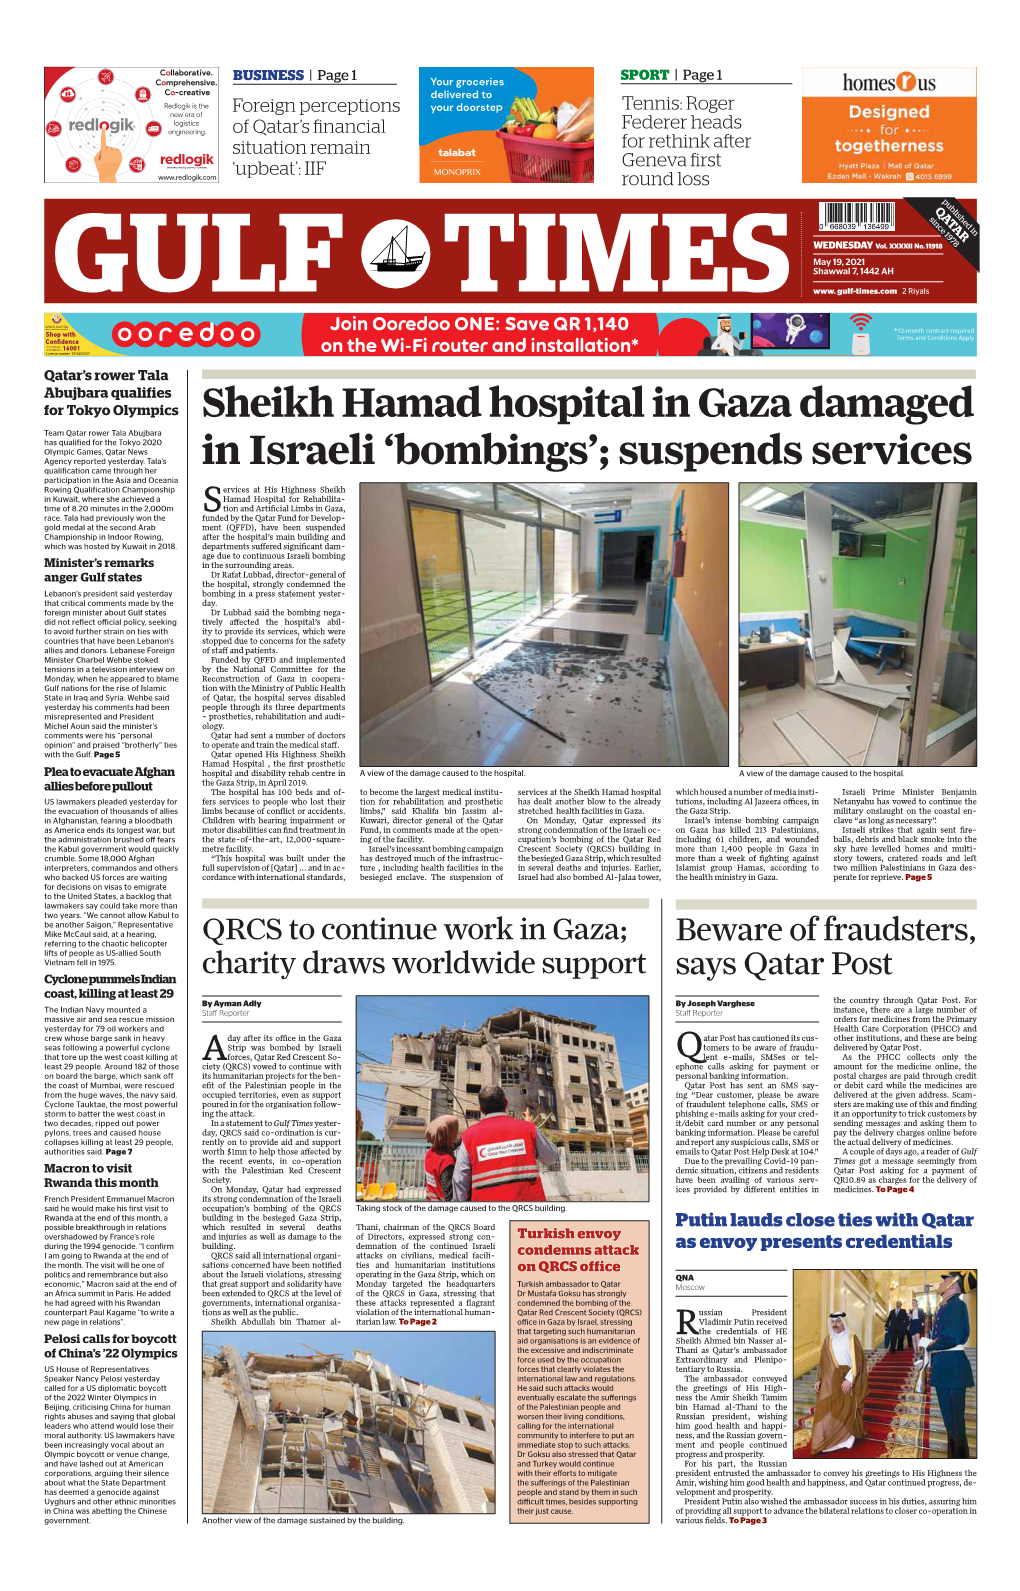 Sheikh Hamad Hospital in Gaza Damaged in Israeli